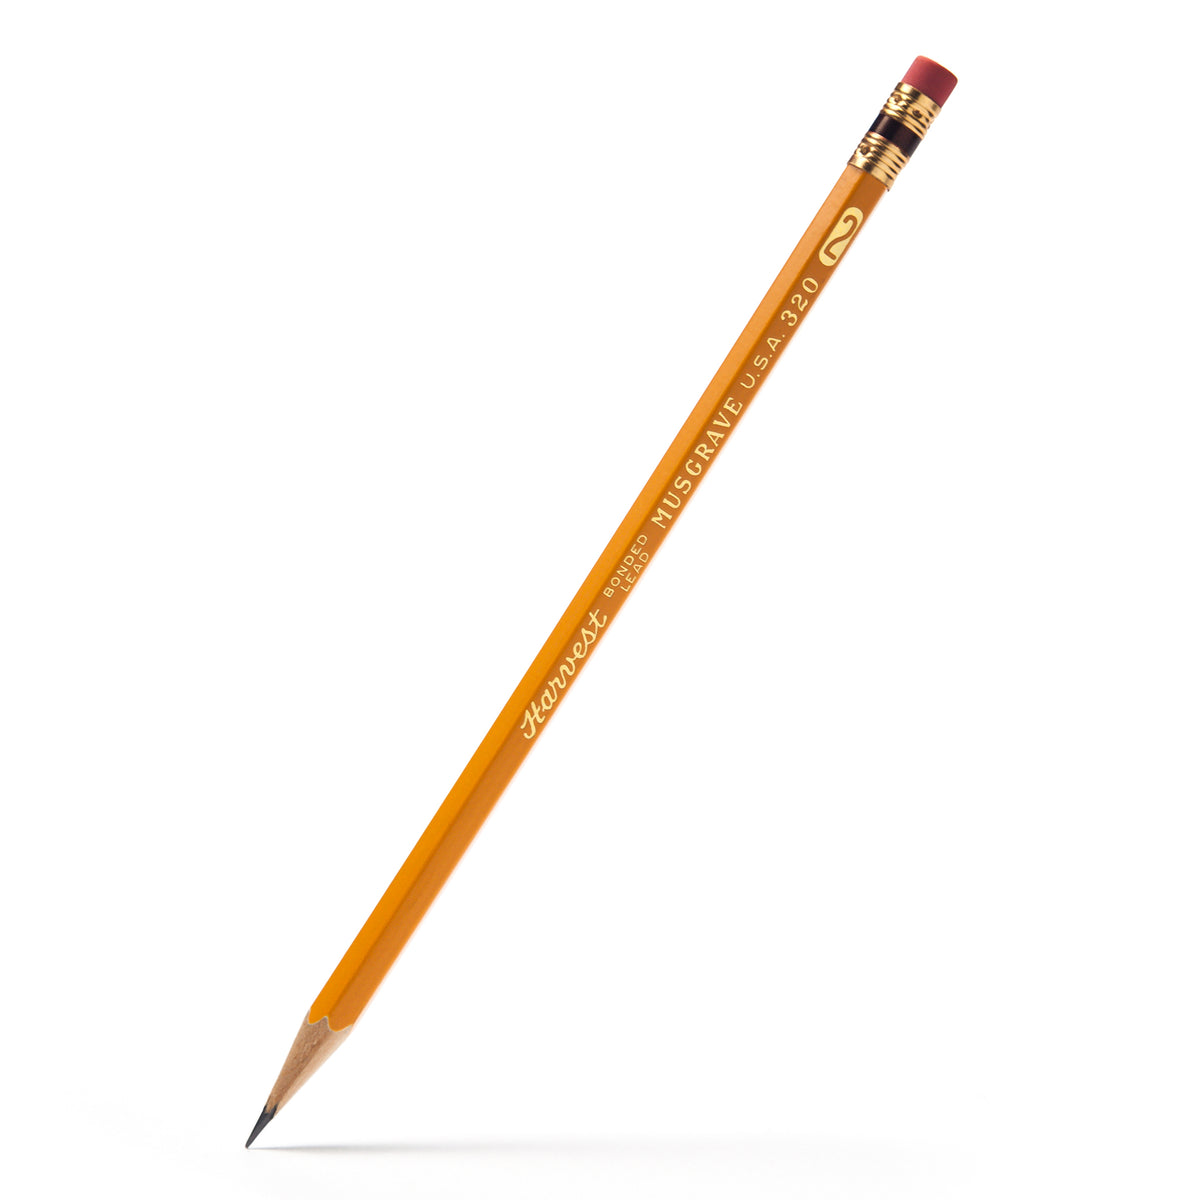 No. 2 Pencil Set - 12 Writing Pencils - White Eraser - Appointed Incense Cedar